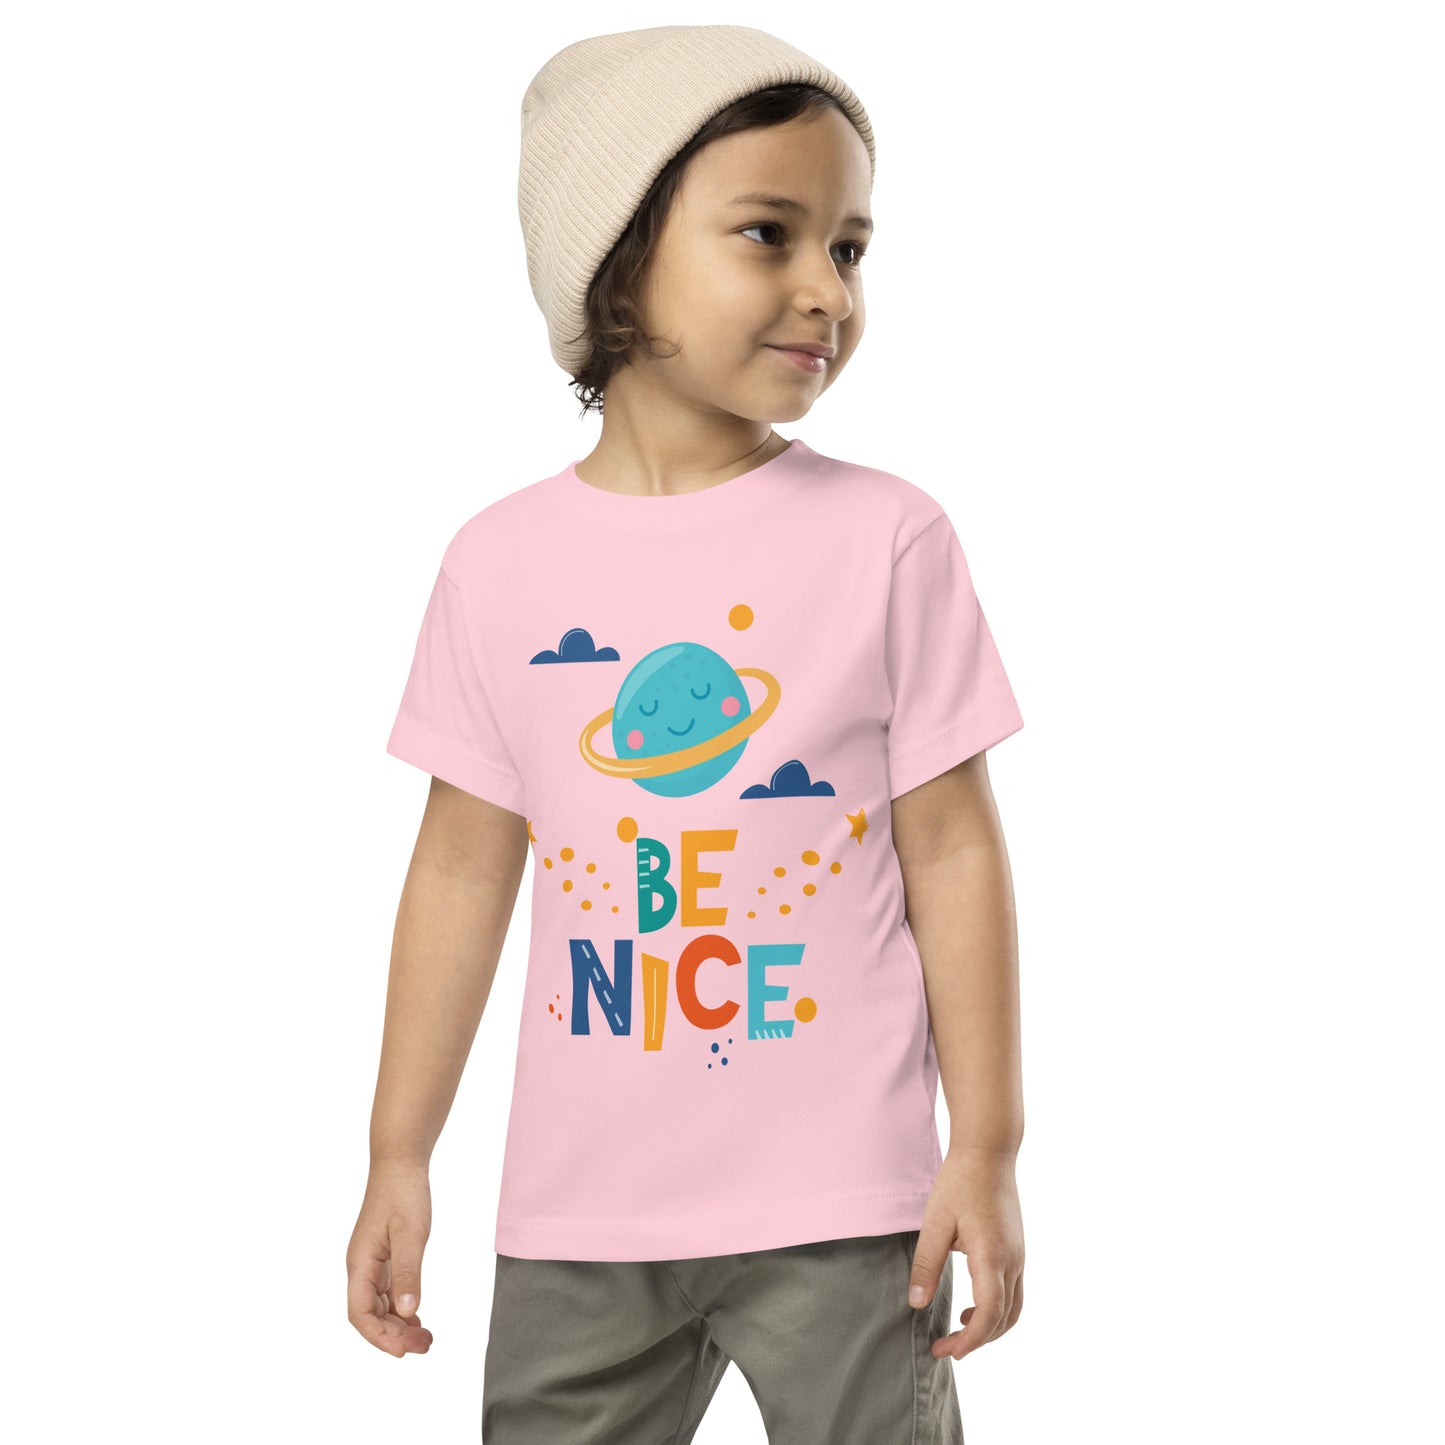 Be Nice - Toddler Short Sleeve Tee